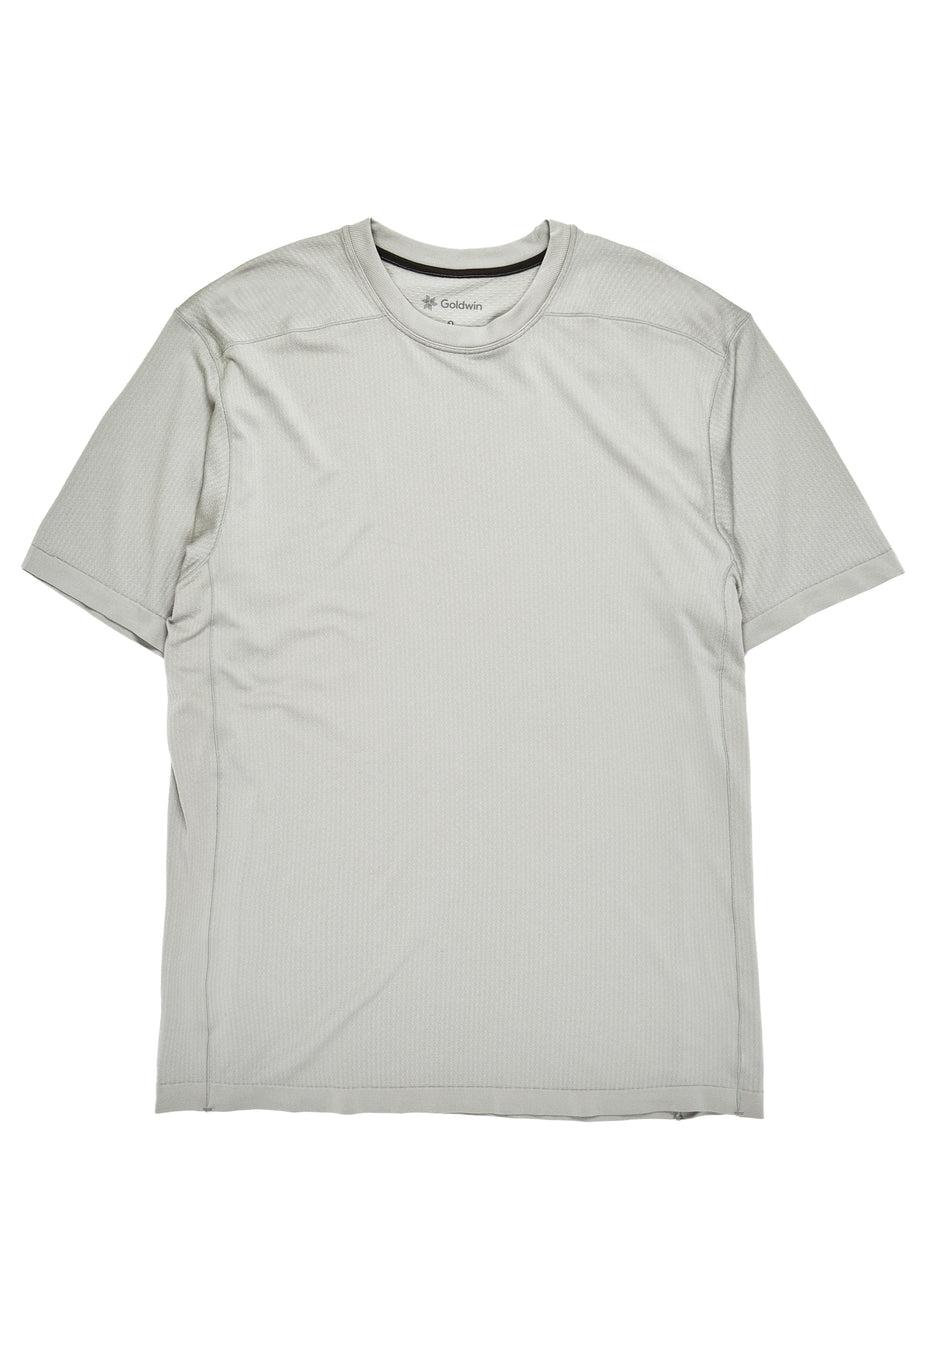 Goldwin Men's Convexity Comfort T-shirt - Cloud Gray